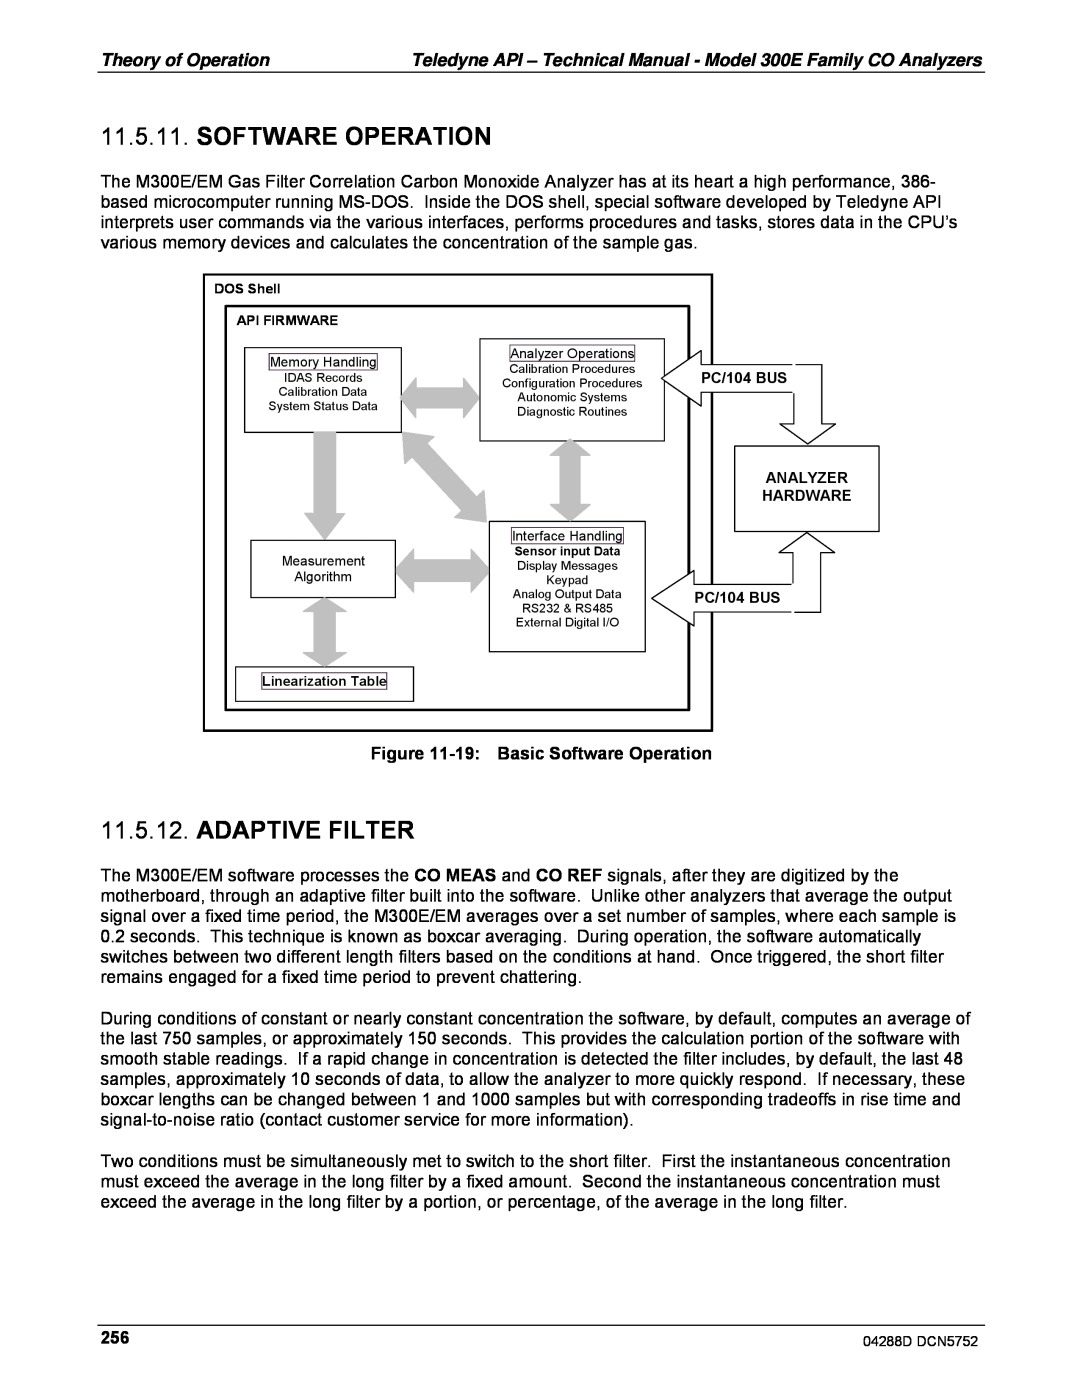 Teledyne M300EM operation manual Adaptive Filter, 19:Basic Software Operation 